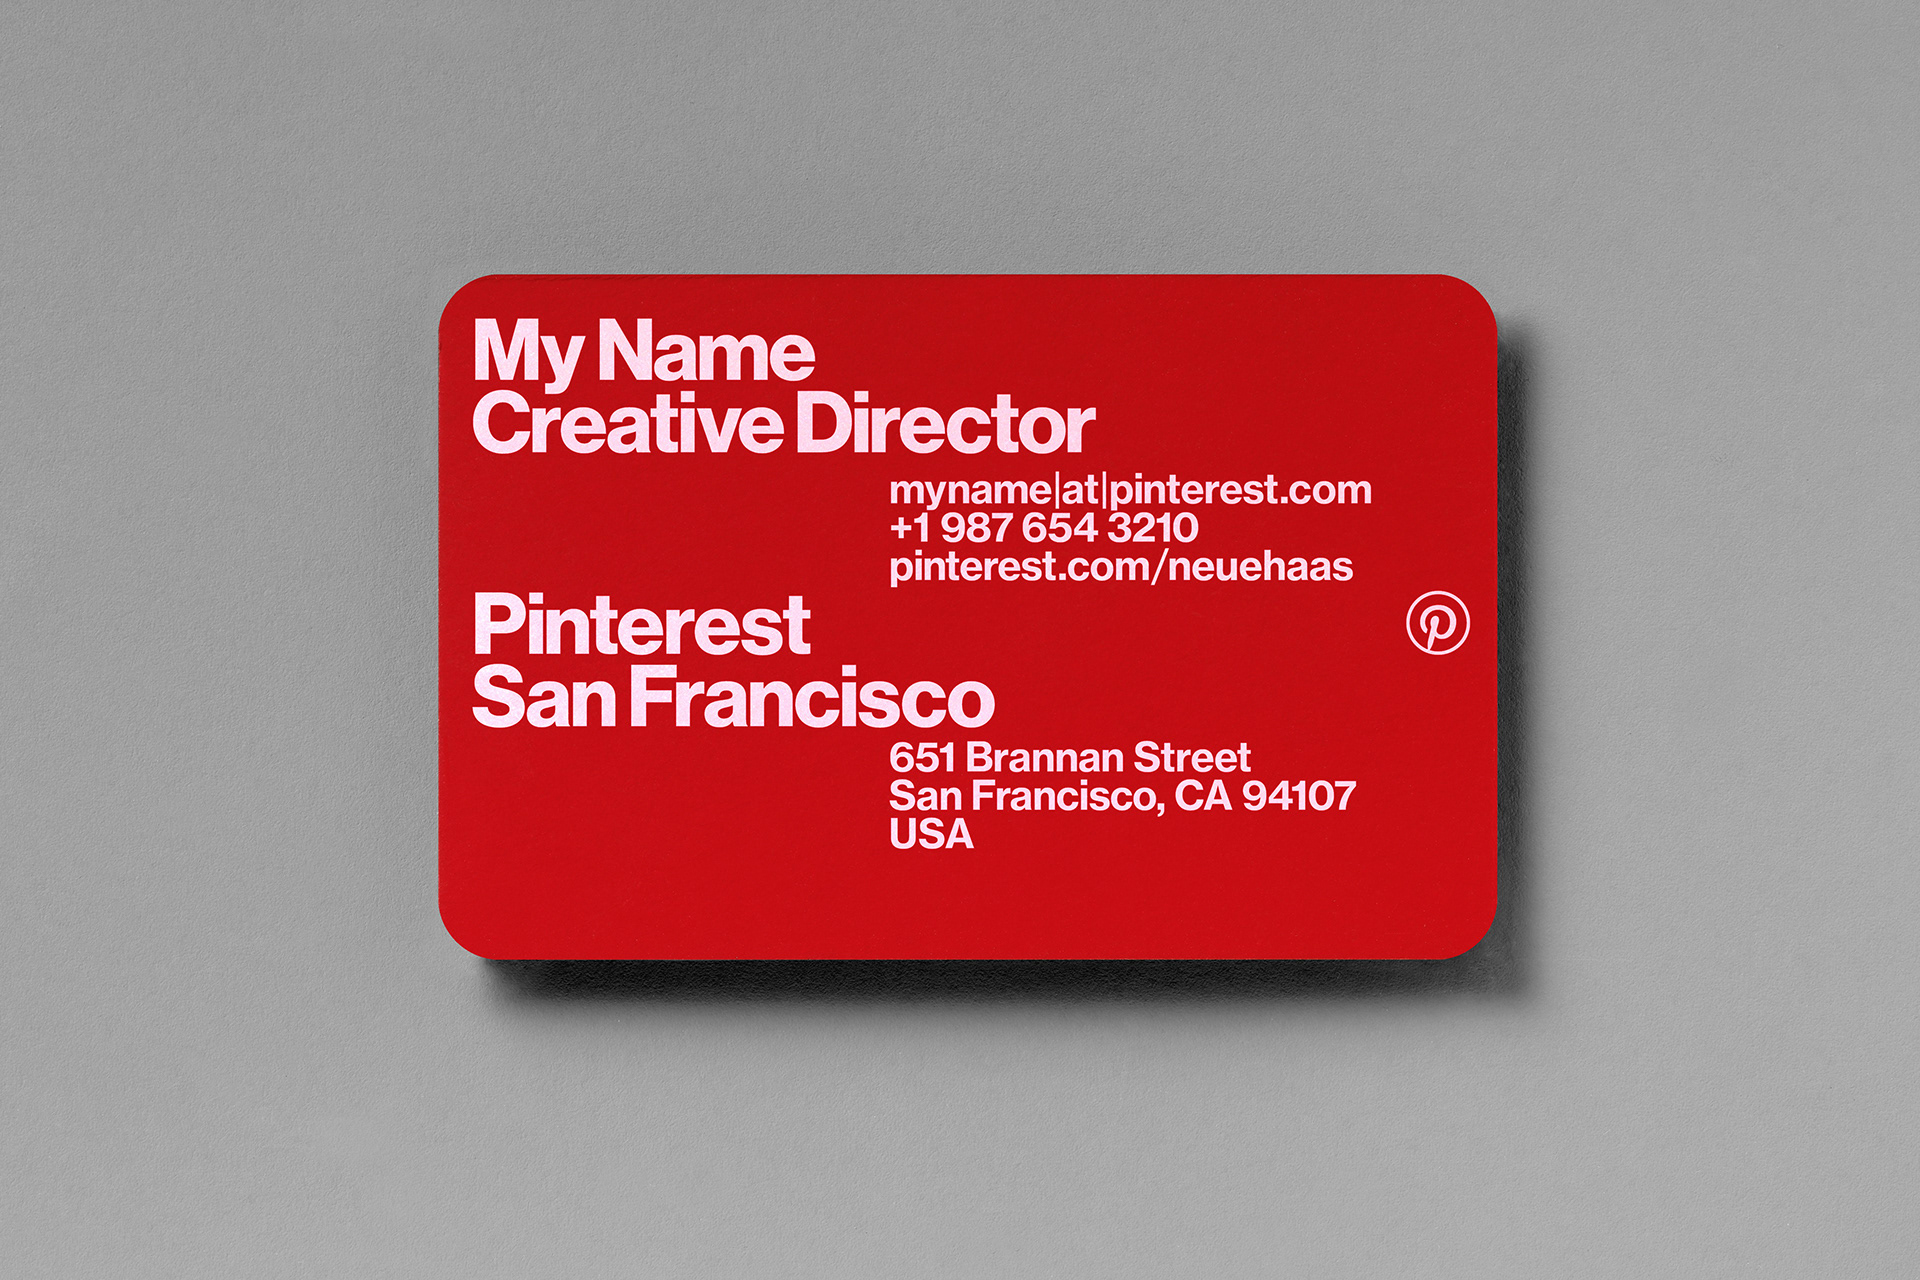 Refining Pinterest's Brand Design and Visual Identity